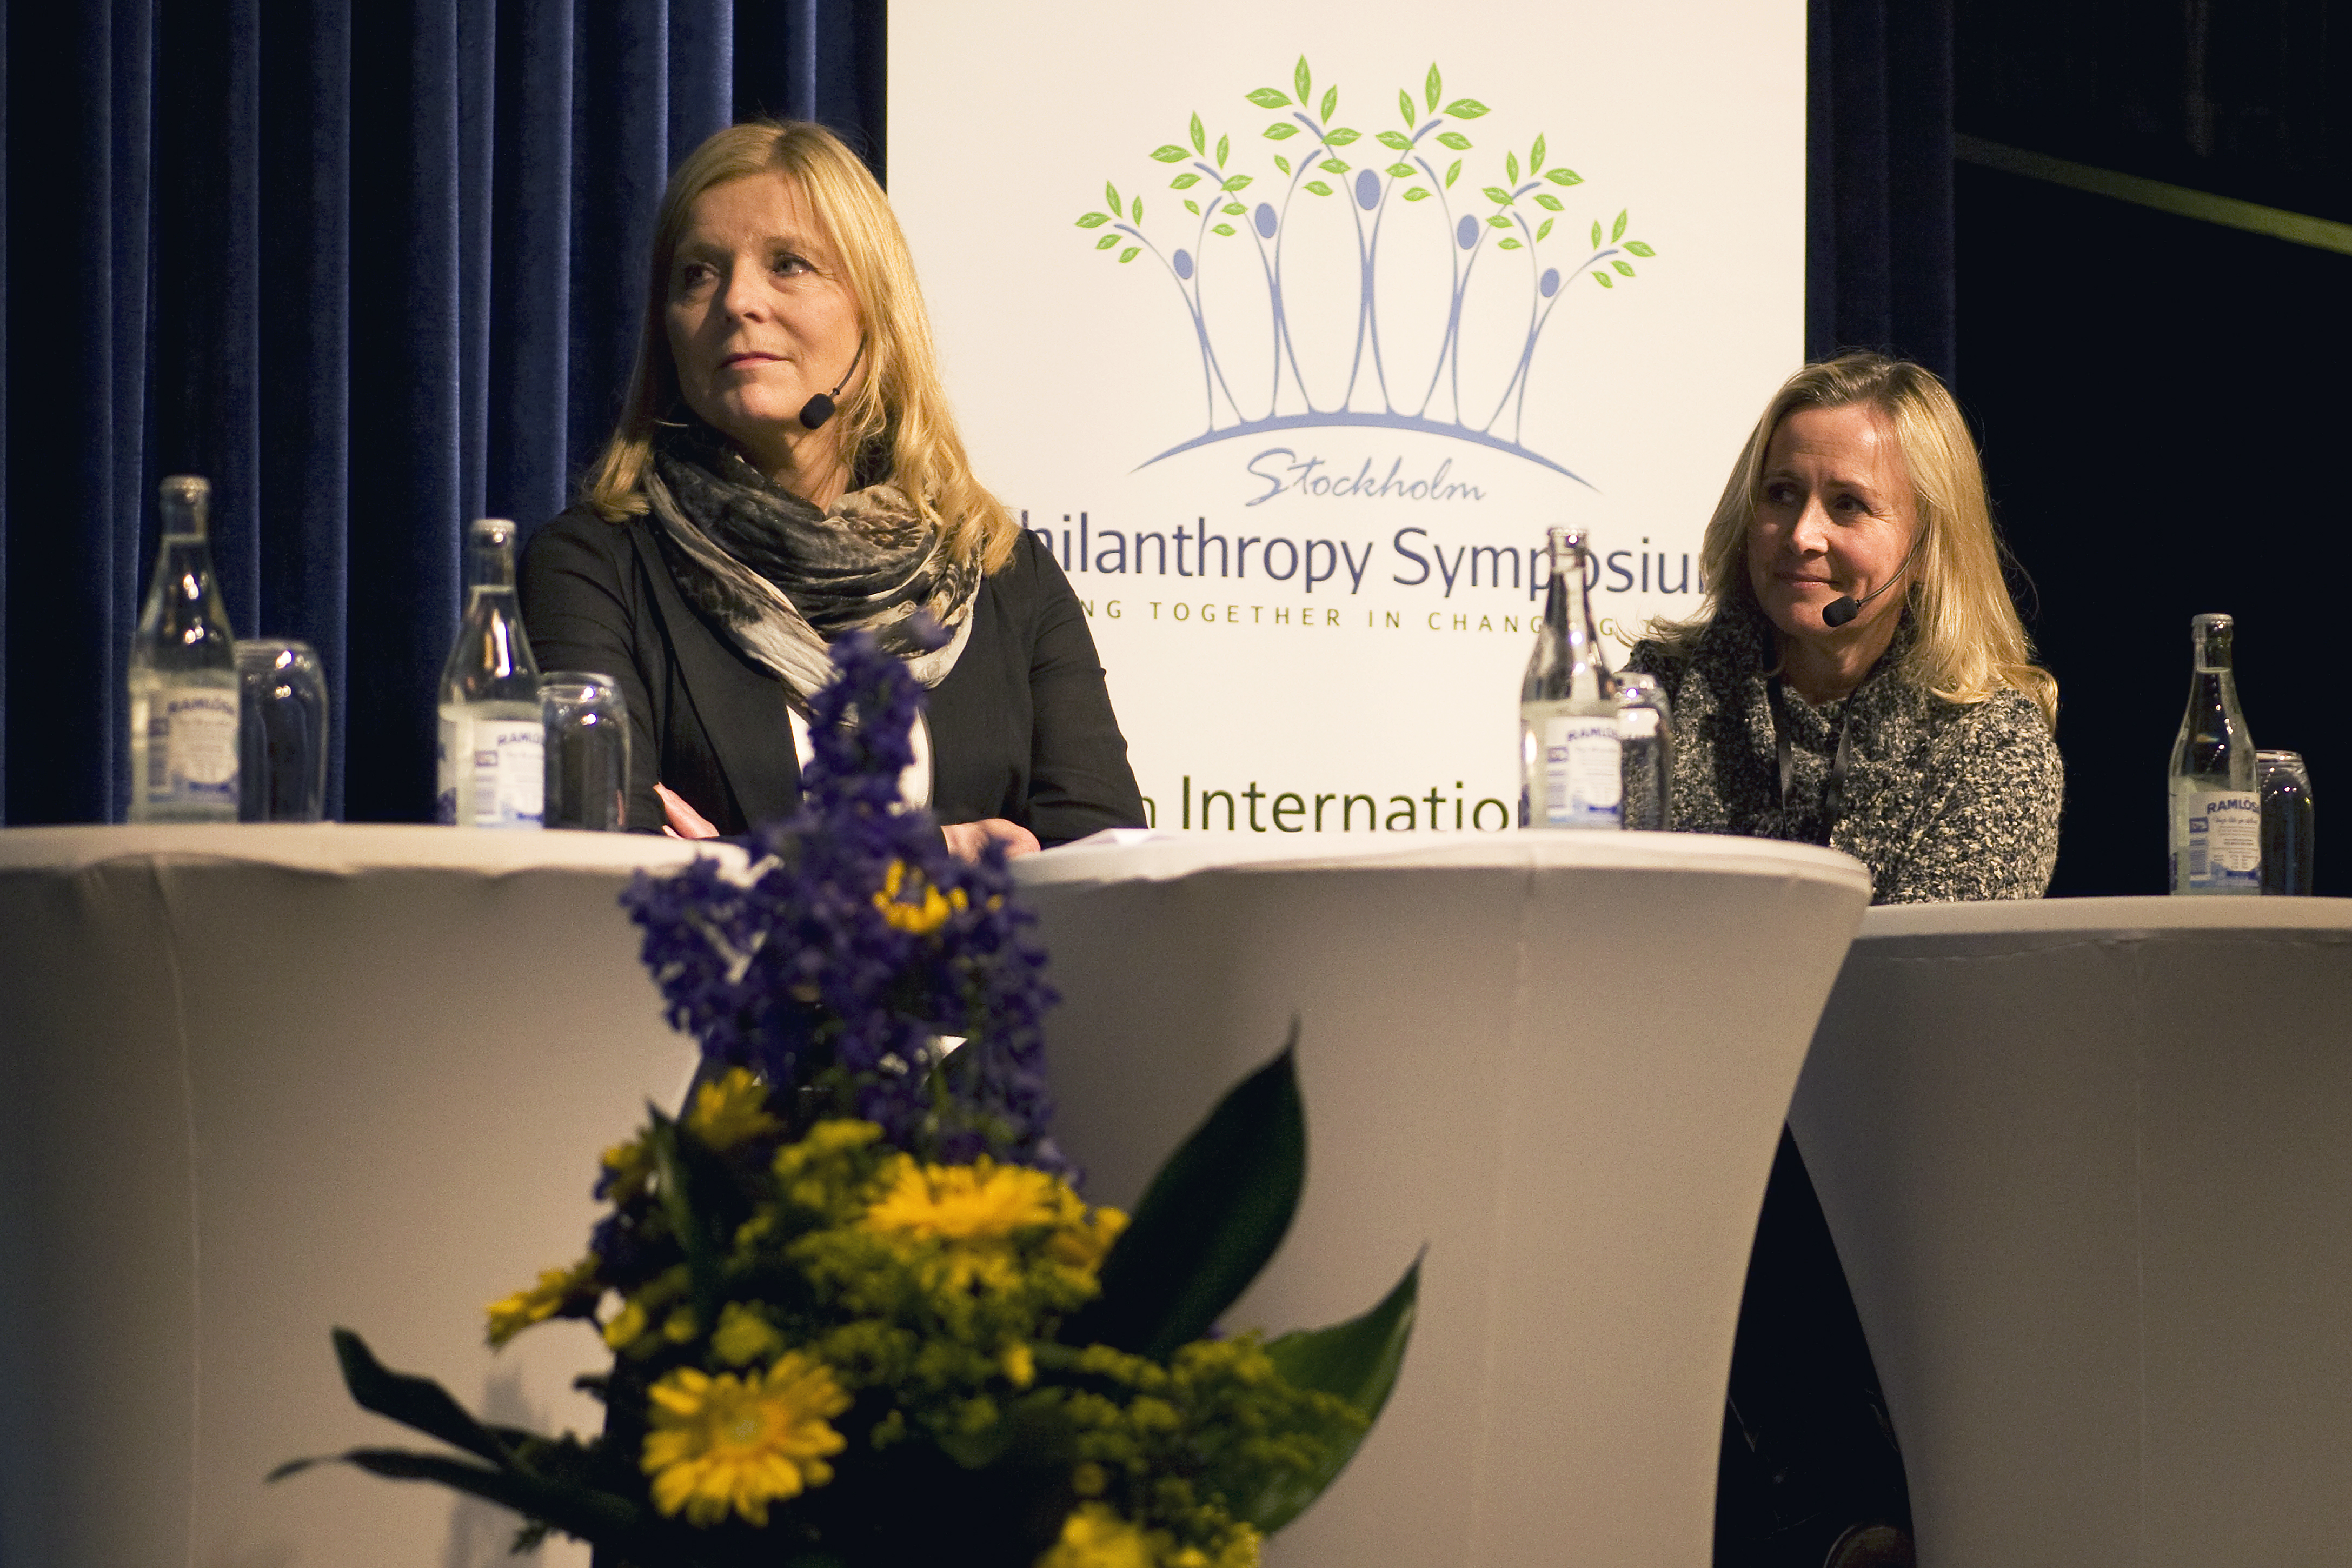 Stockholm Filantropy Symposium 2015